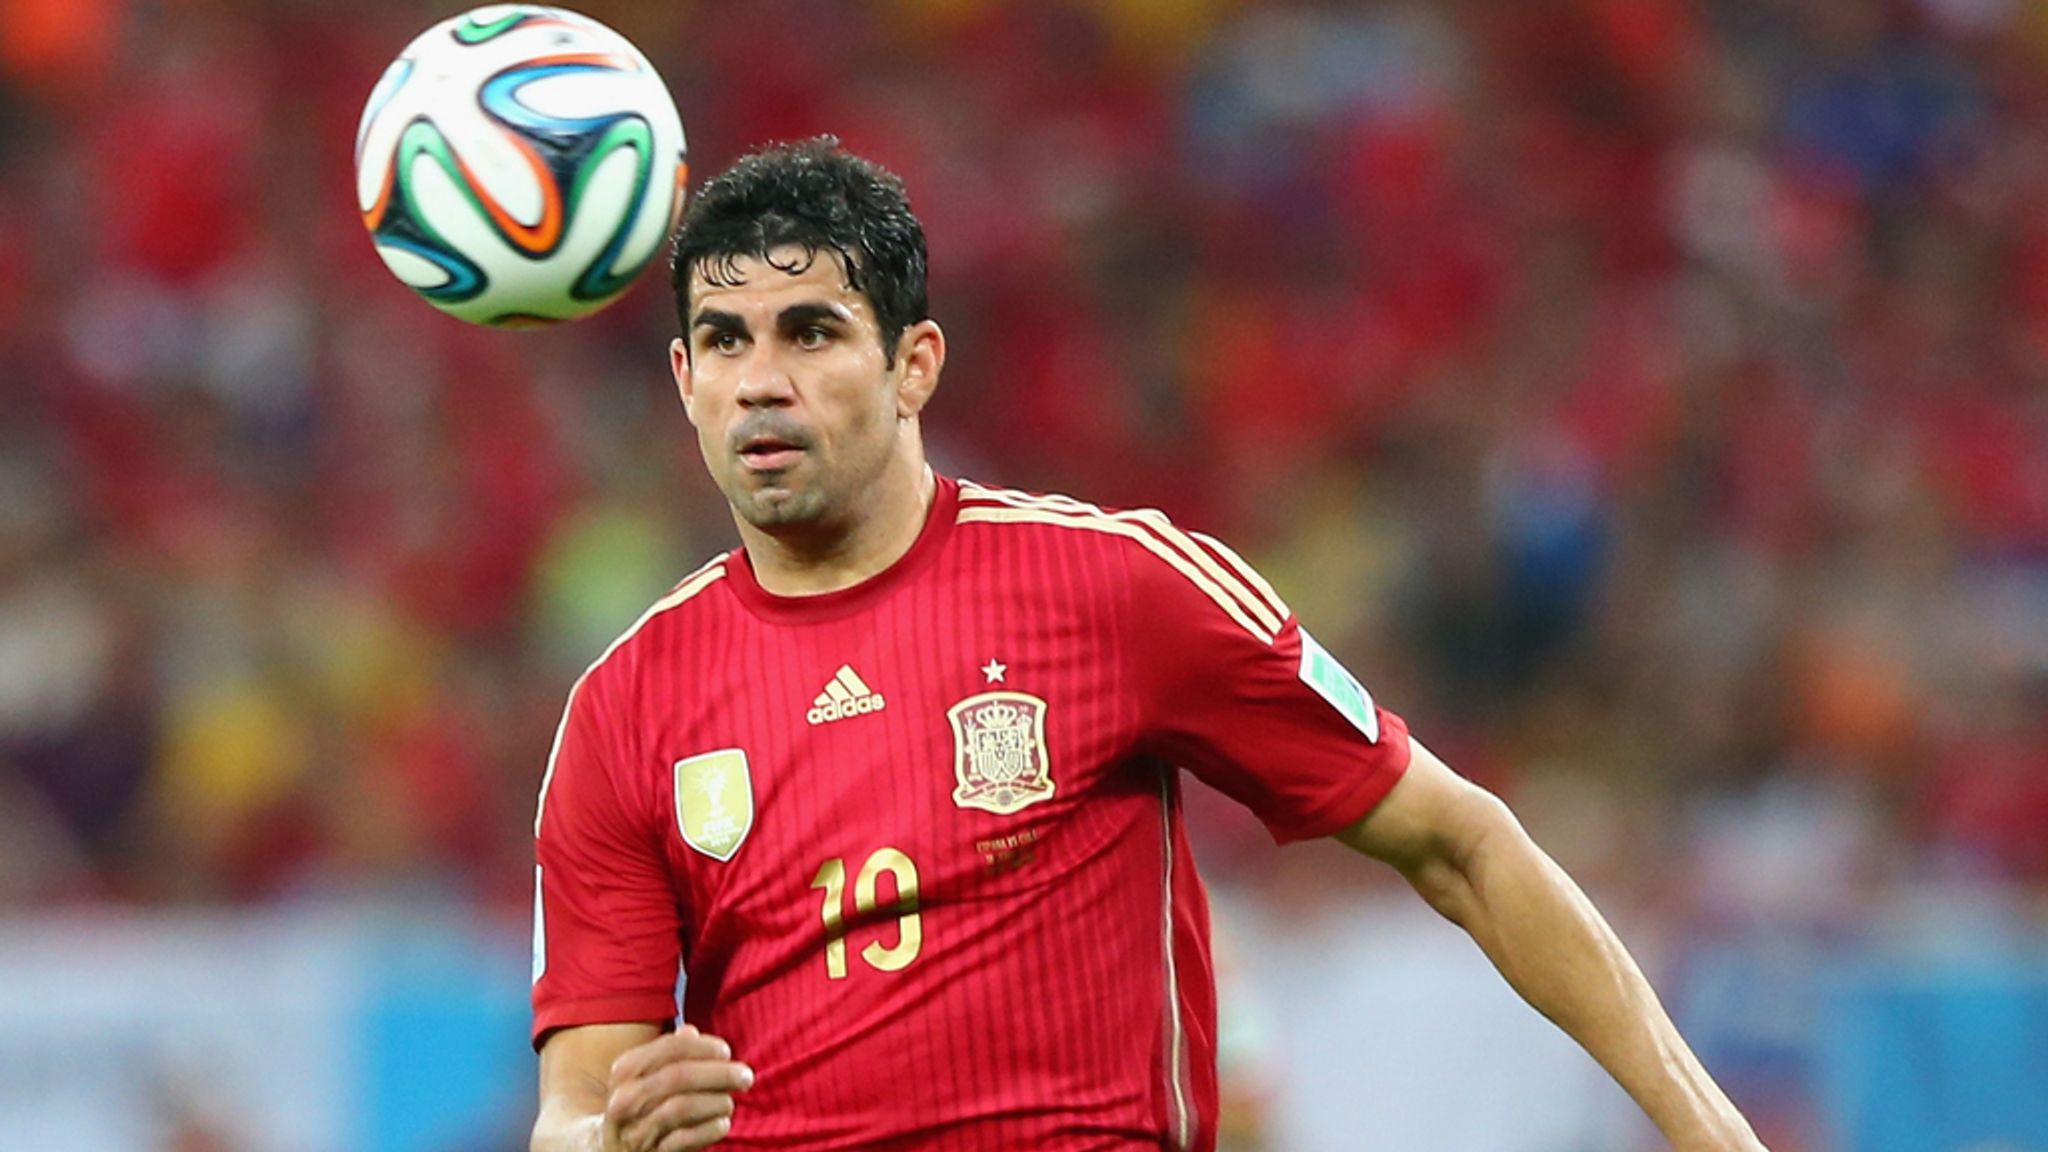 European Chelsea striker Diego Costa ready to play for Spain | Football News | Sky Sports